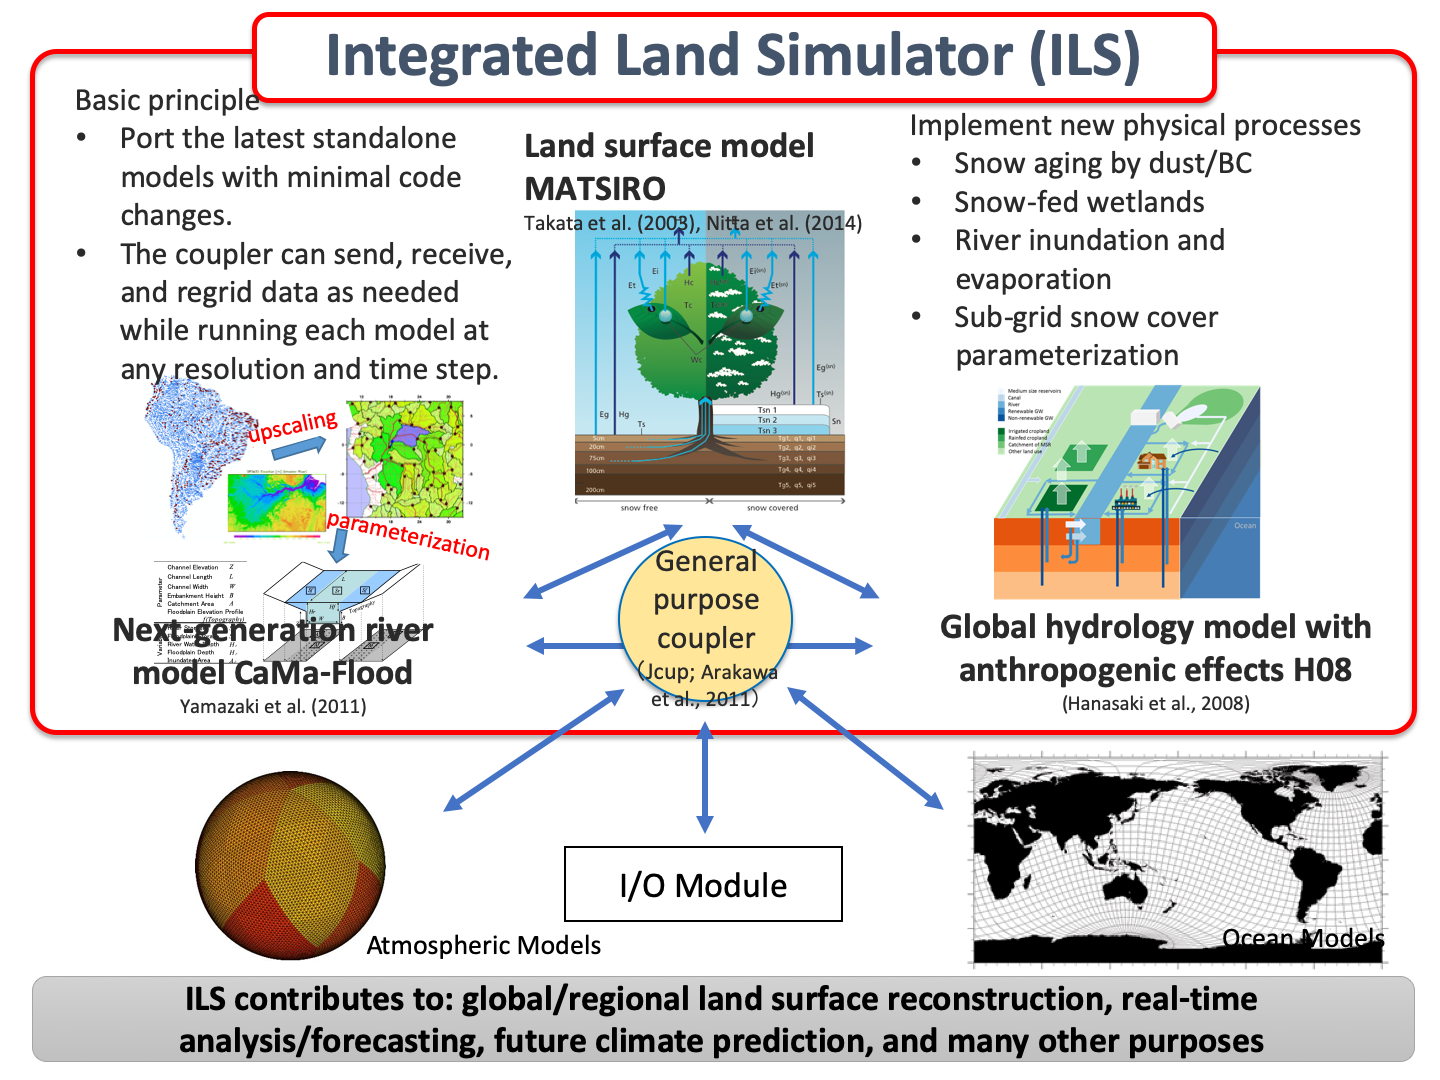 Schematic of Integrated Land Simulator (ILS) development